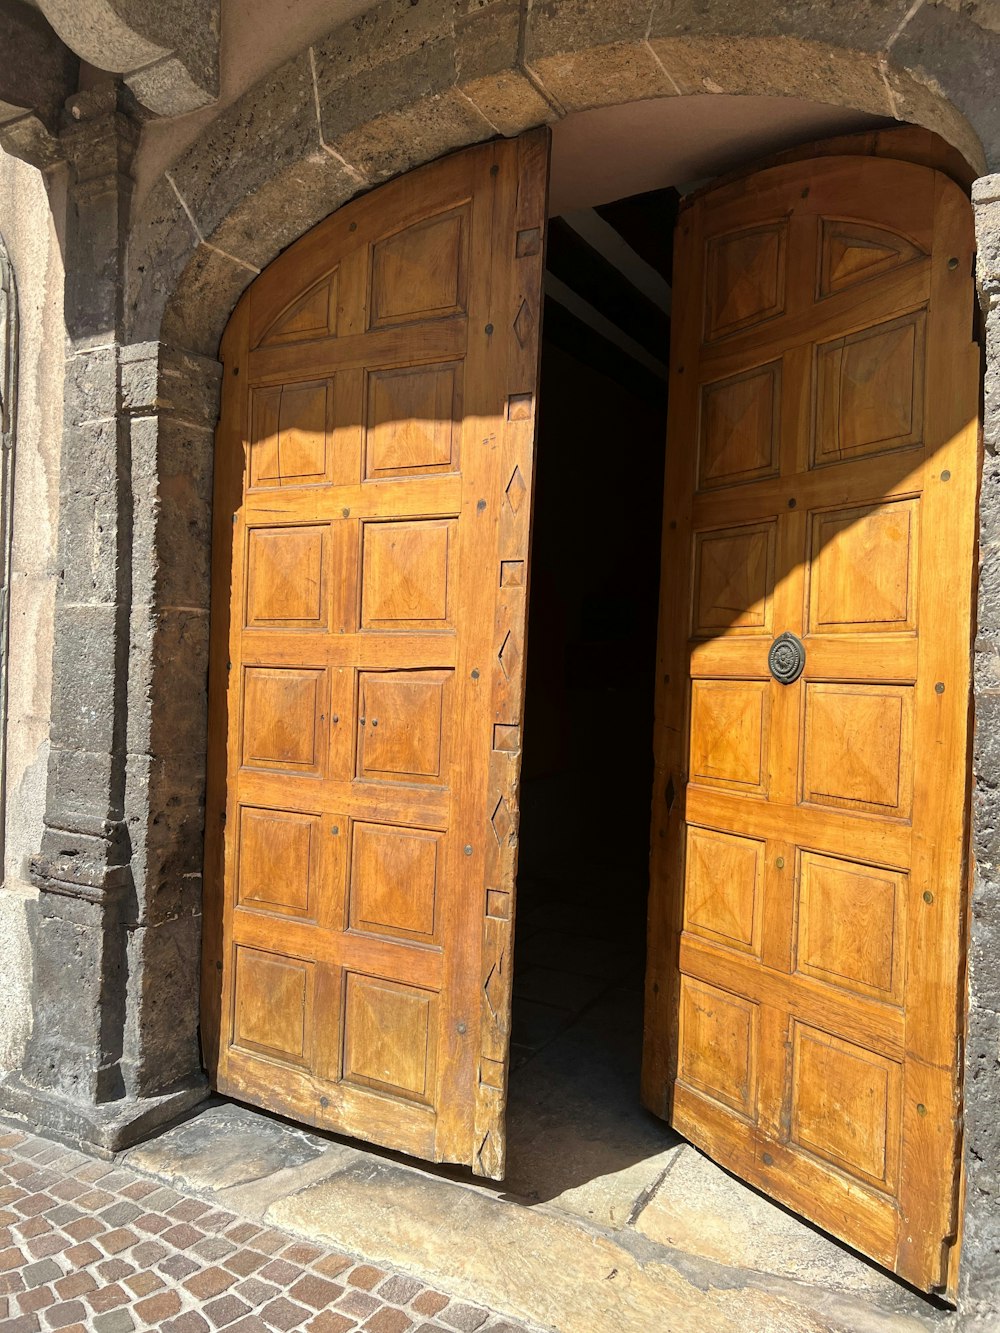 a couple of wooden doors